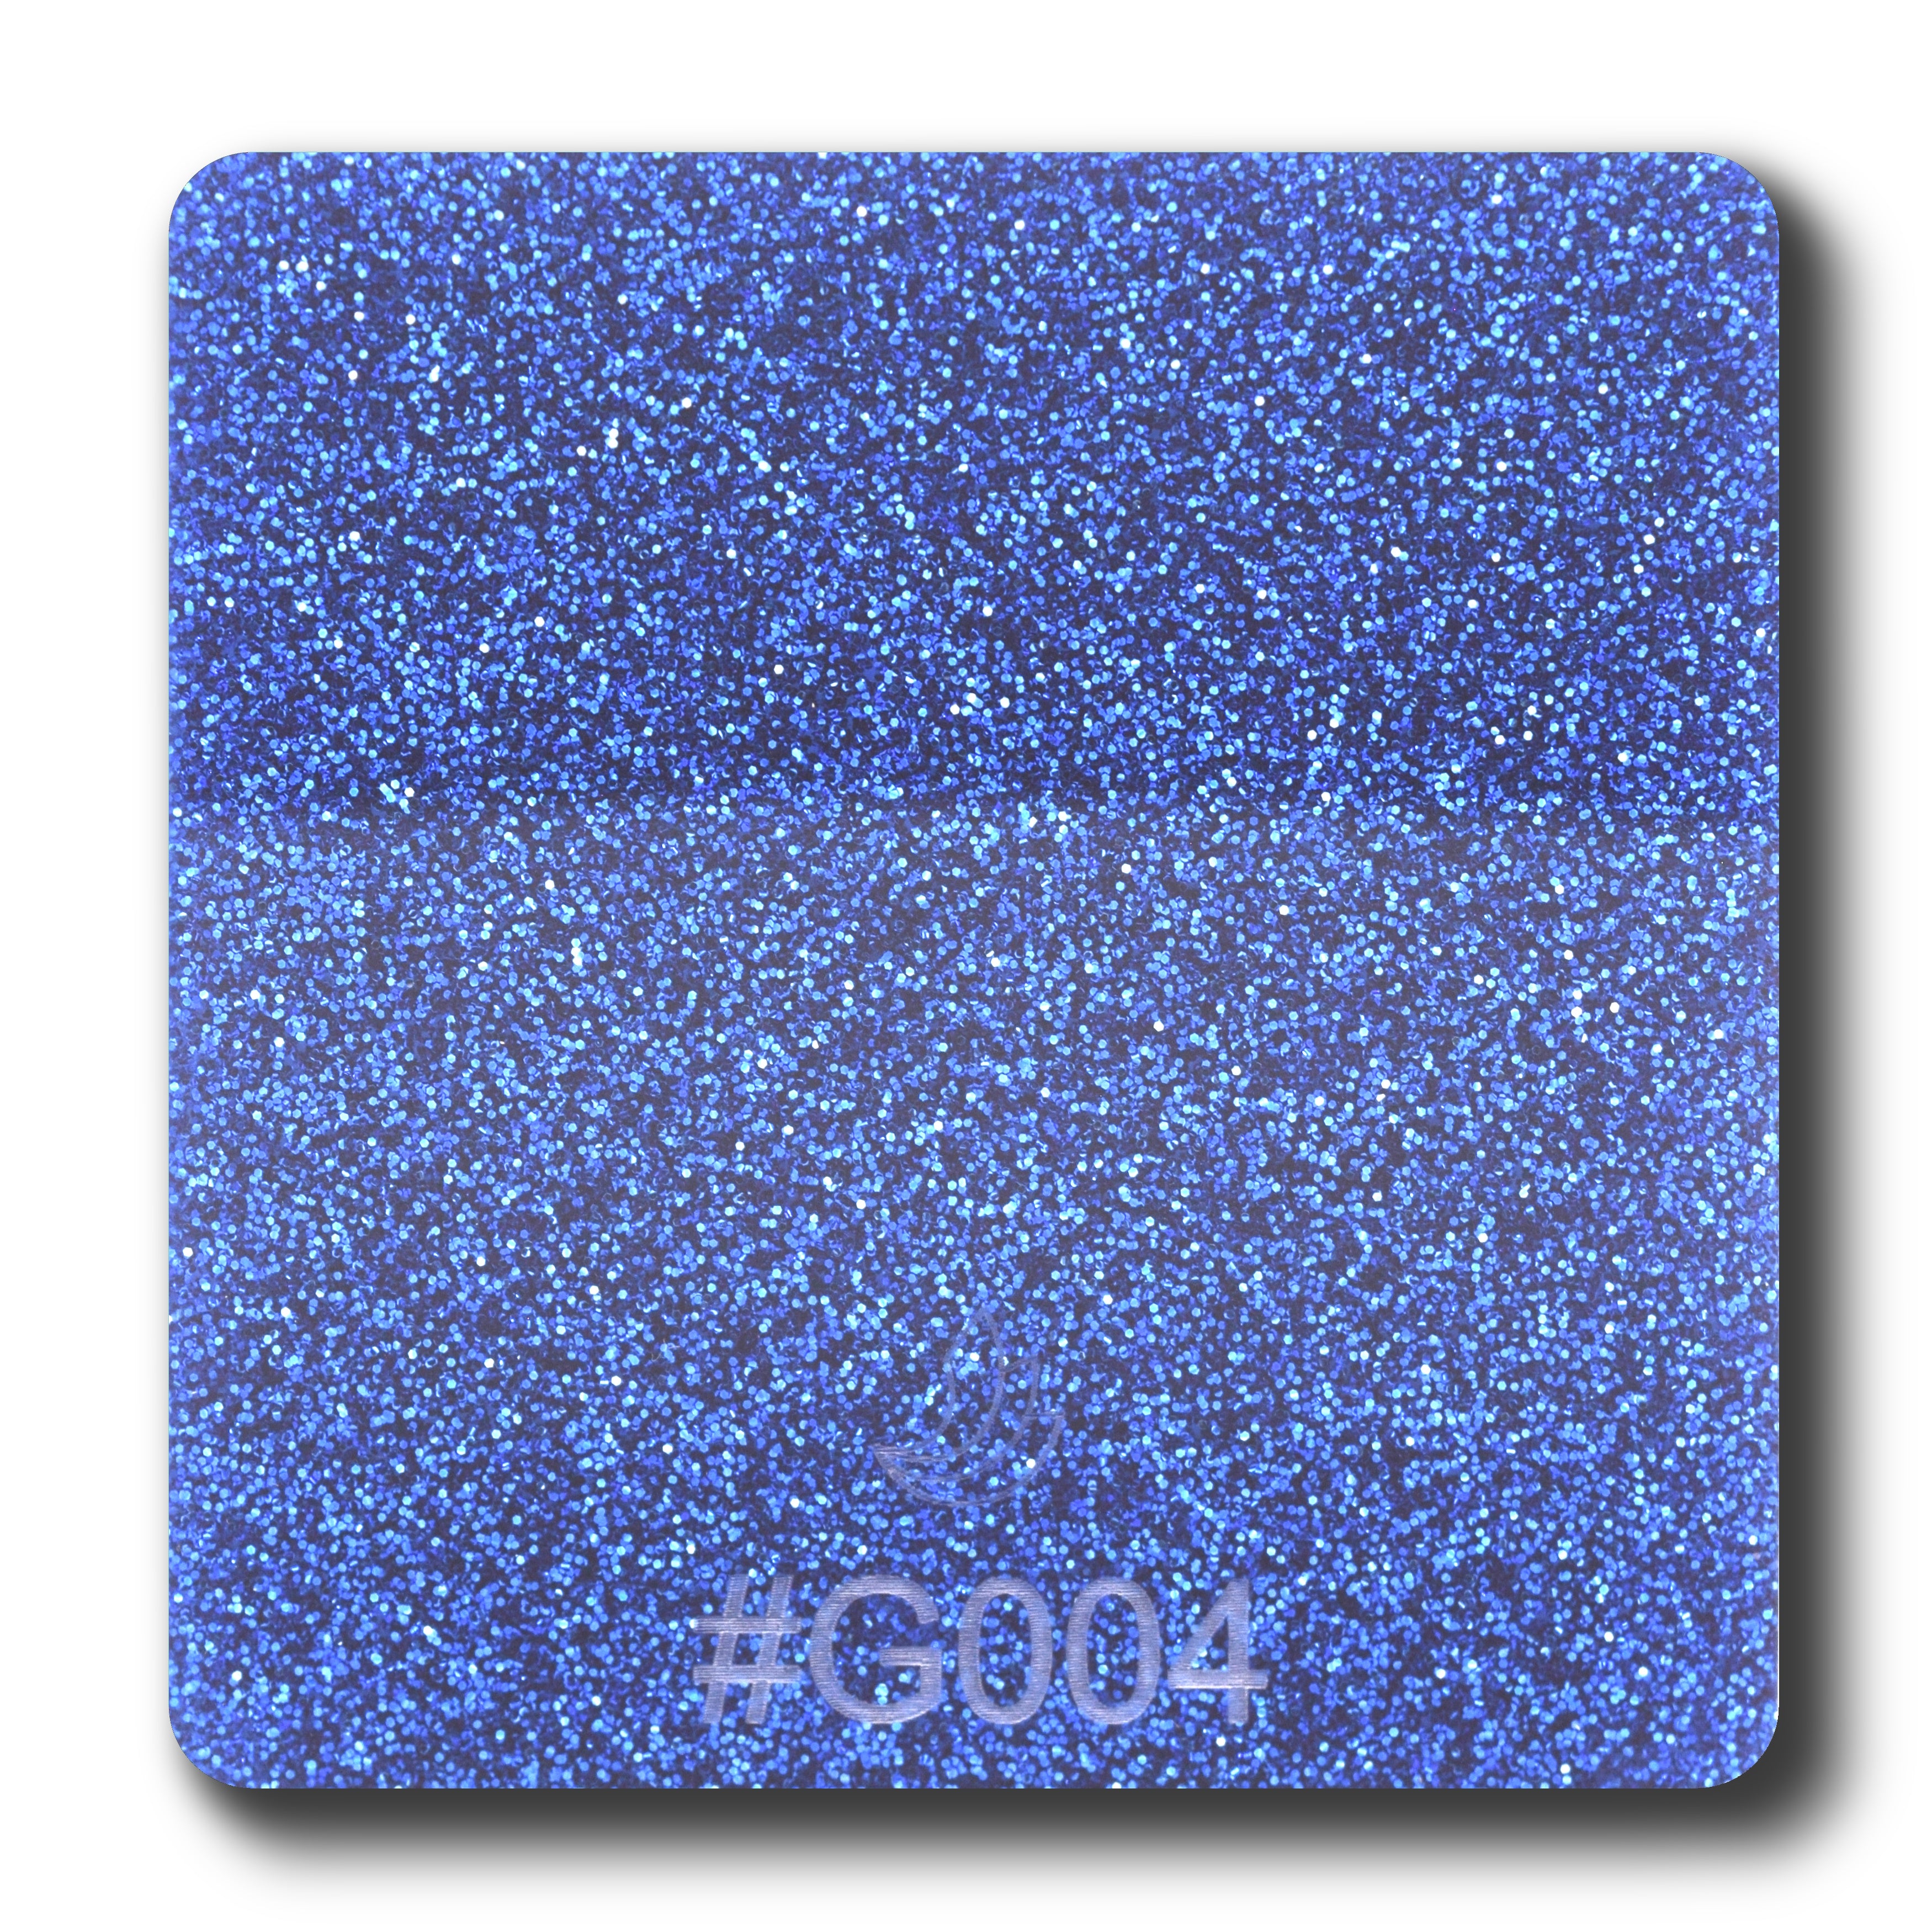 1/8" Blue Glitter Two-Sided Acrylic Sheet